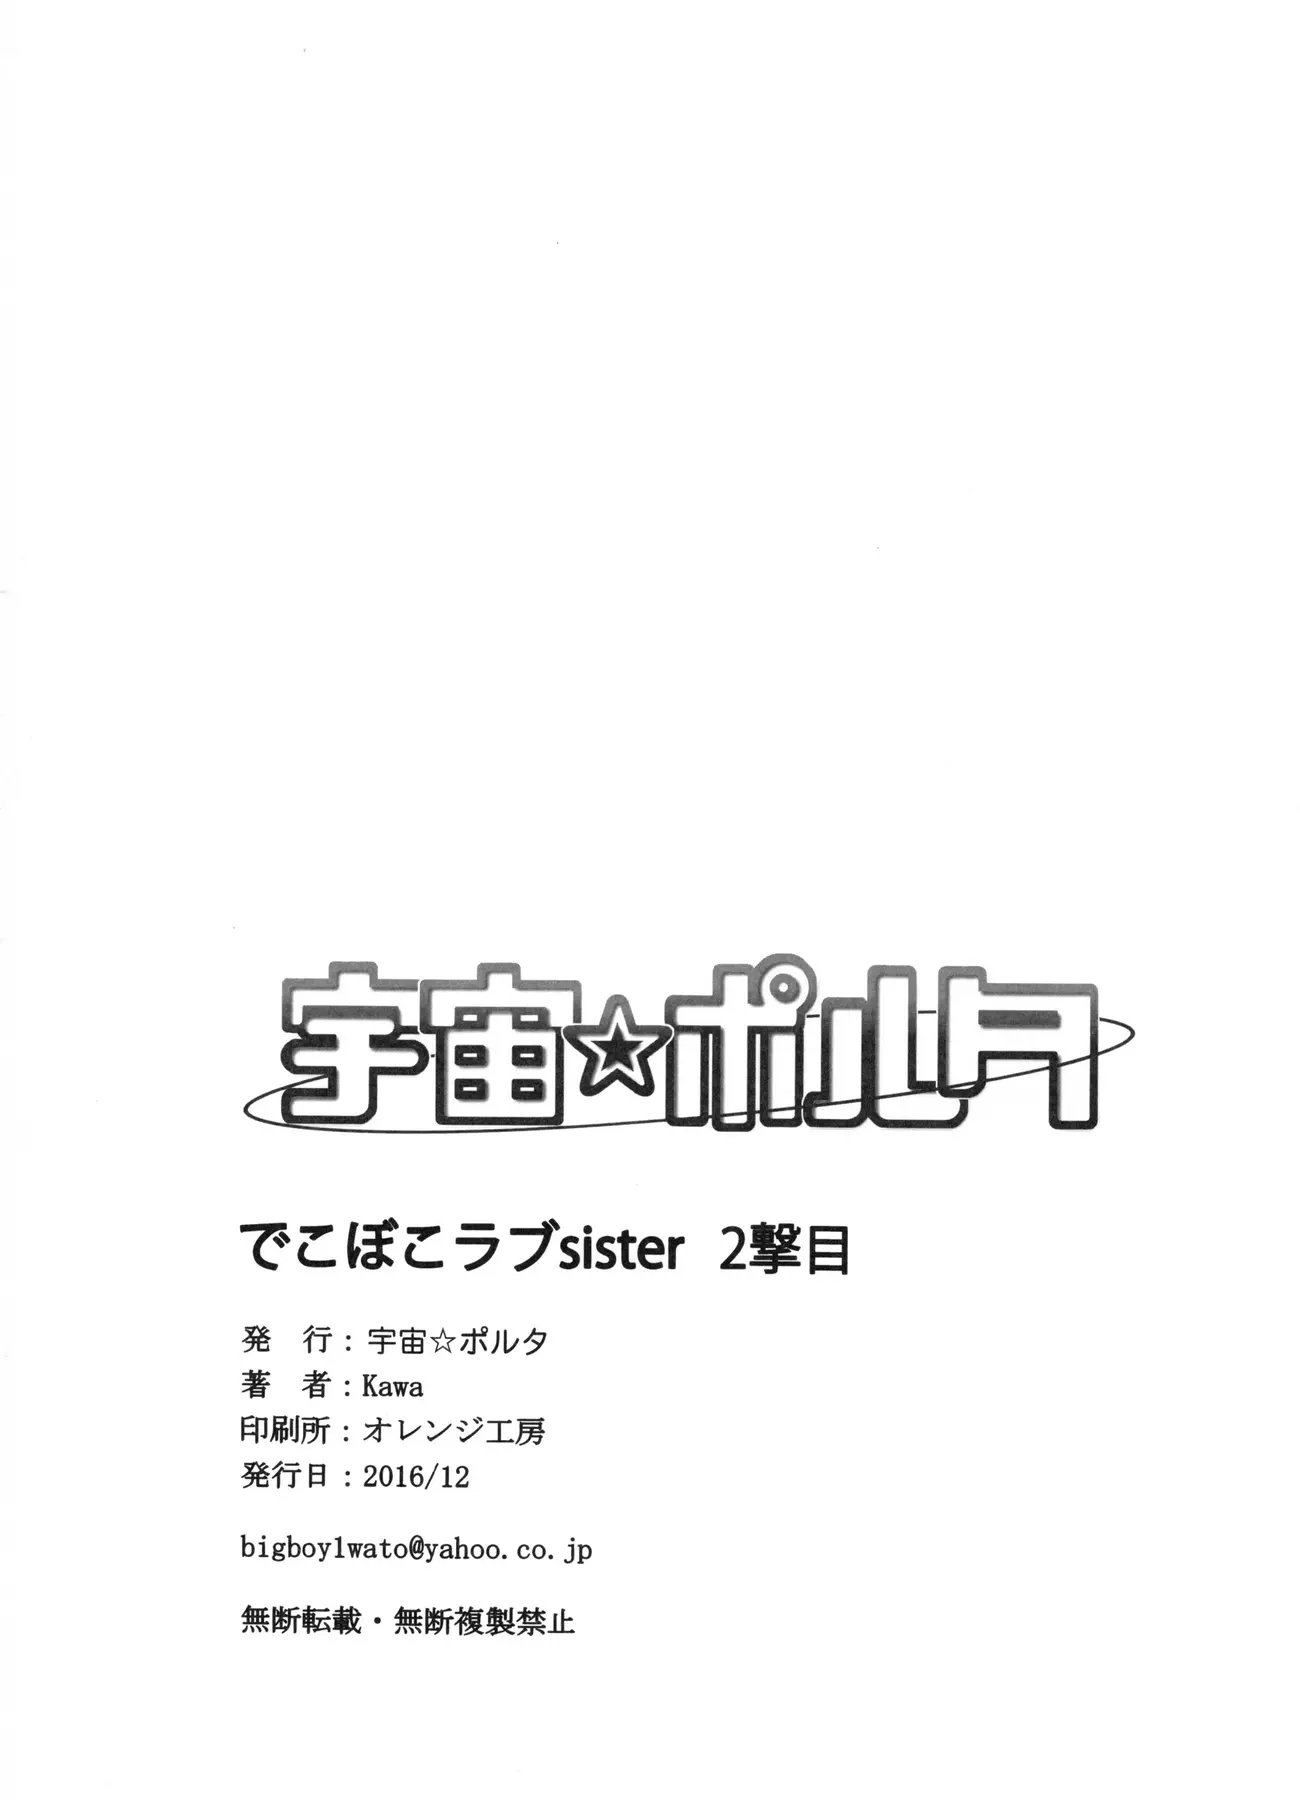 Dekoboko Love Sister 2-gekime!